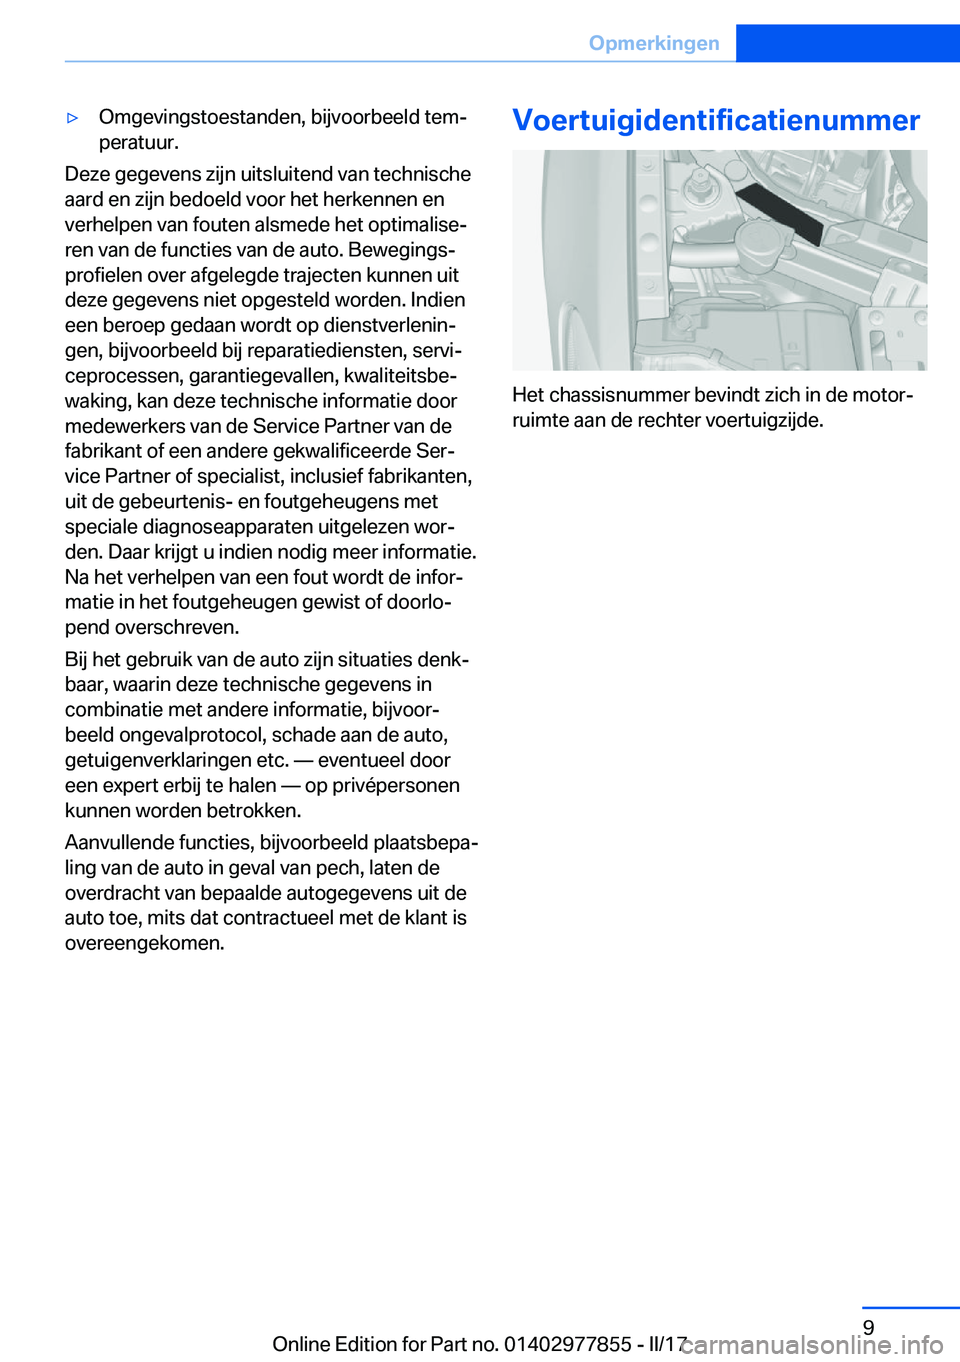 BMW X3 2017  Instructieboekjes (in Dutch) 'y�O�m�g�e�v�i�n�g�s�t�o�e�s�t�a�n�d�e�n�,� �b�i�j�v�o�o�r�b�e�e�l�d� �t�e�mj�p�e�r�a�t�u�u�r�.
�D�e�z�e� �g�e�g�e�v�e�n�s� �z�i�j�n� �u�i�t�s�l�u�i�t�e�n�d� �v�a�n� �t�e�c�h�n�i�s�c�h�e�a�a�r�d�